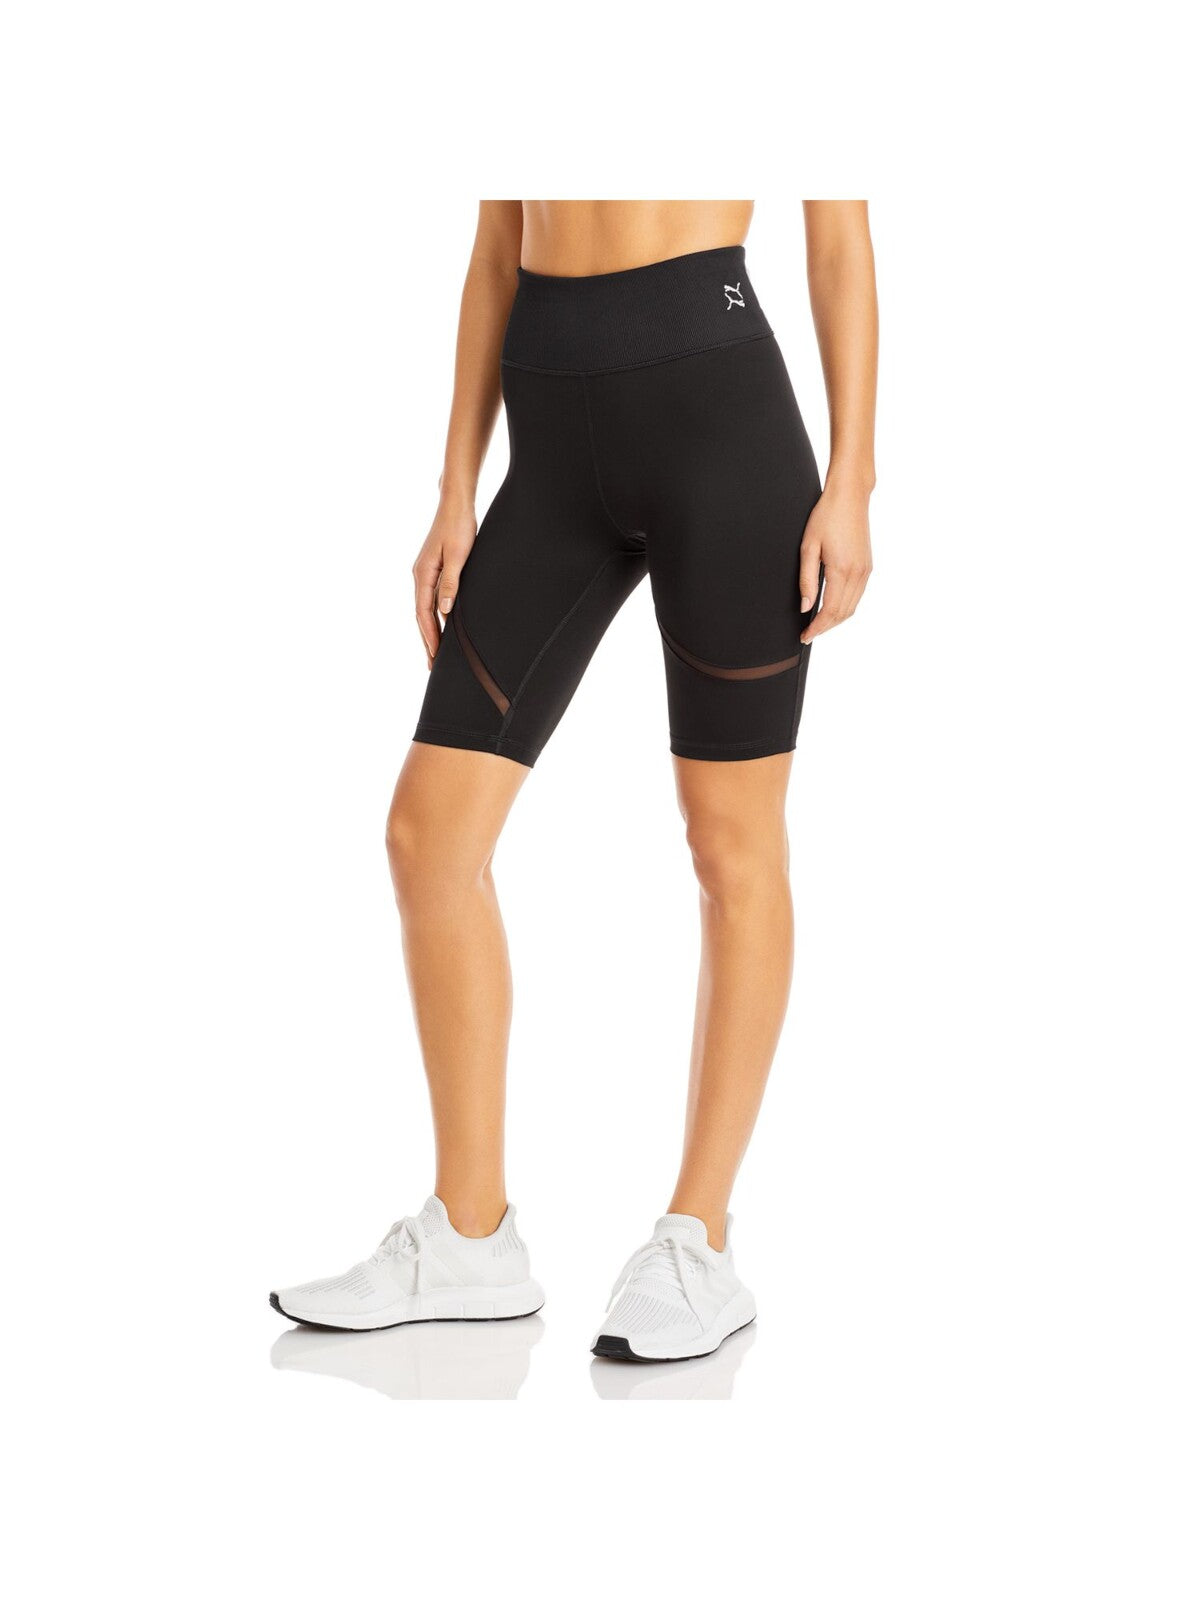 PUMA Womens Black Stretch Ribbed Mesh Inset Bike Shorts Active Wear Skinny Shorts M